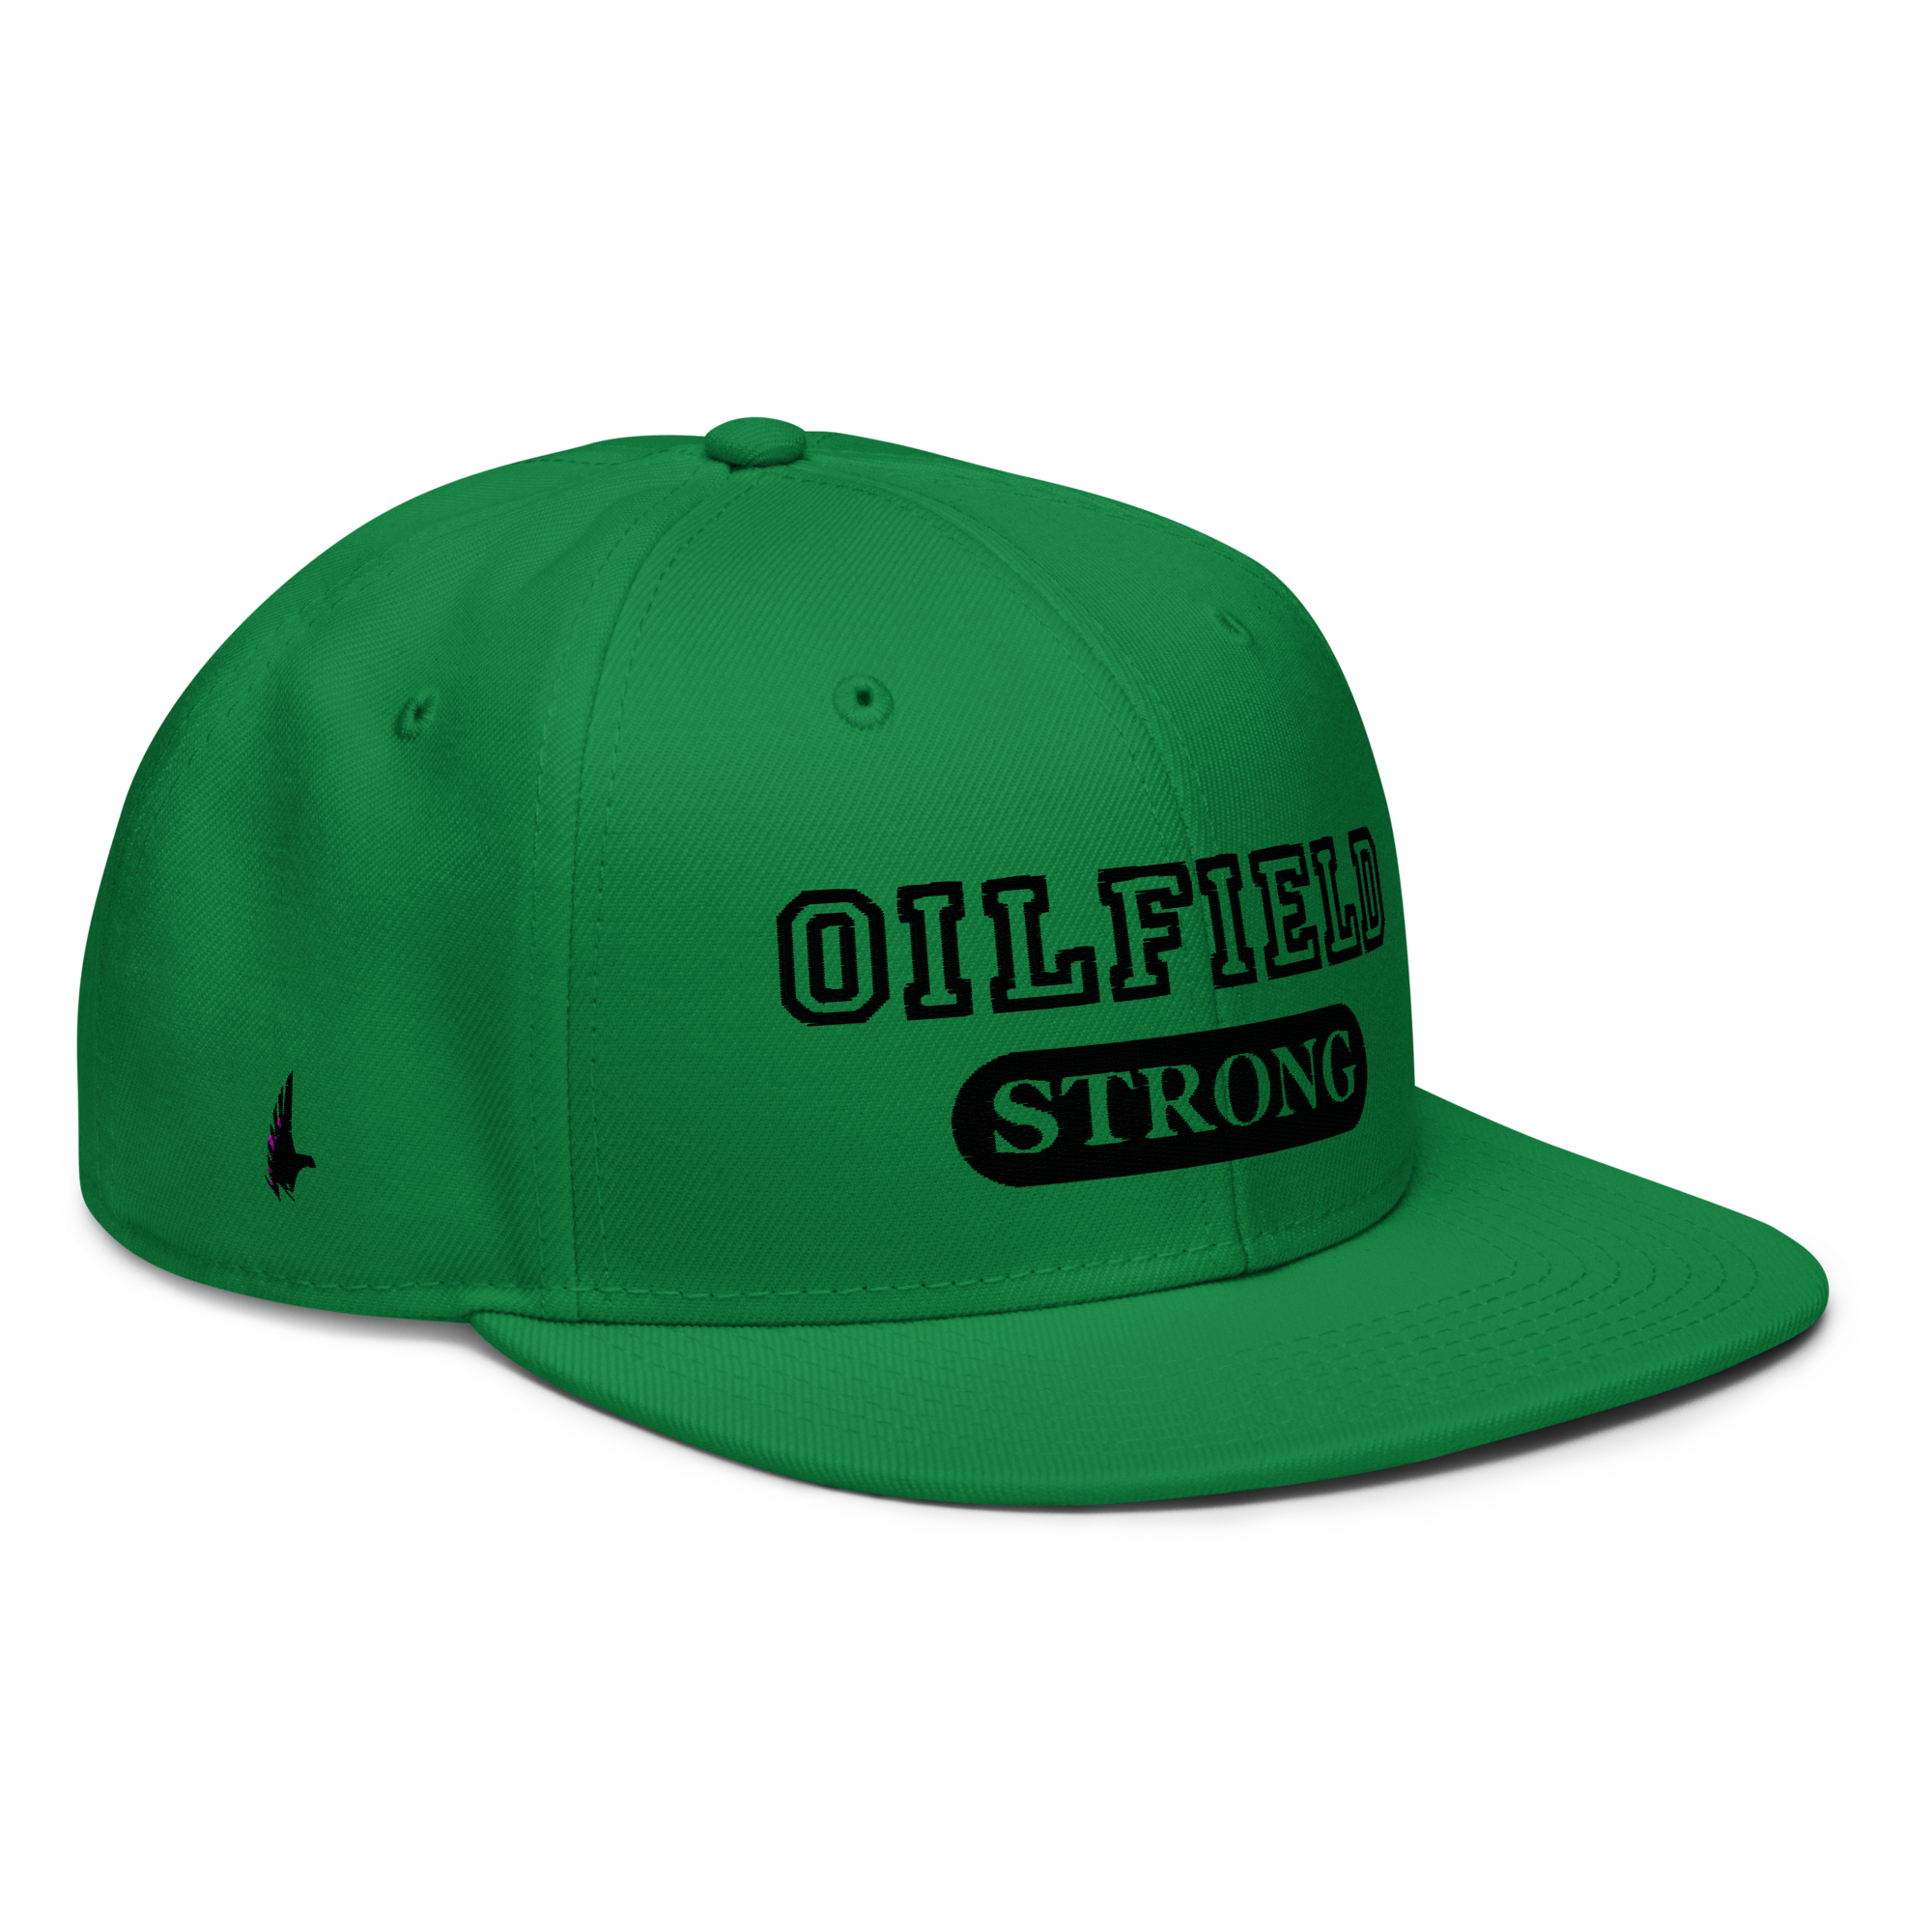 Oilfield Strong Snapback Hat - Green / Black - Loyalty Vibes